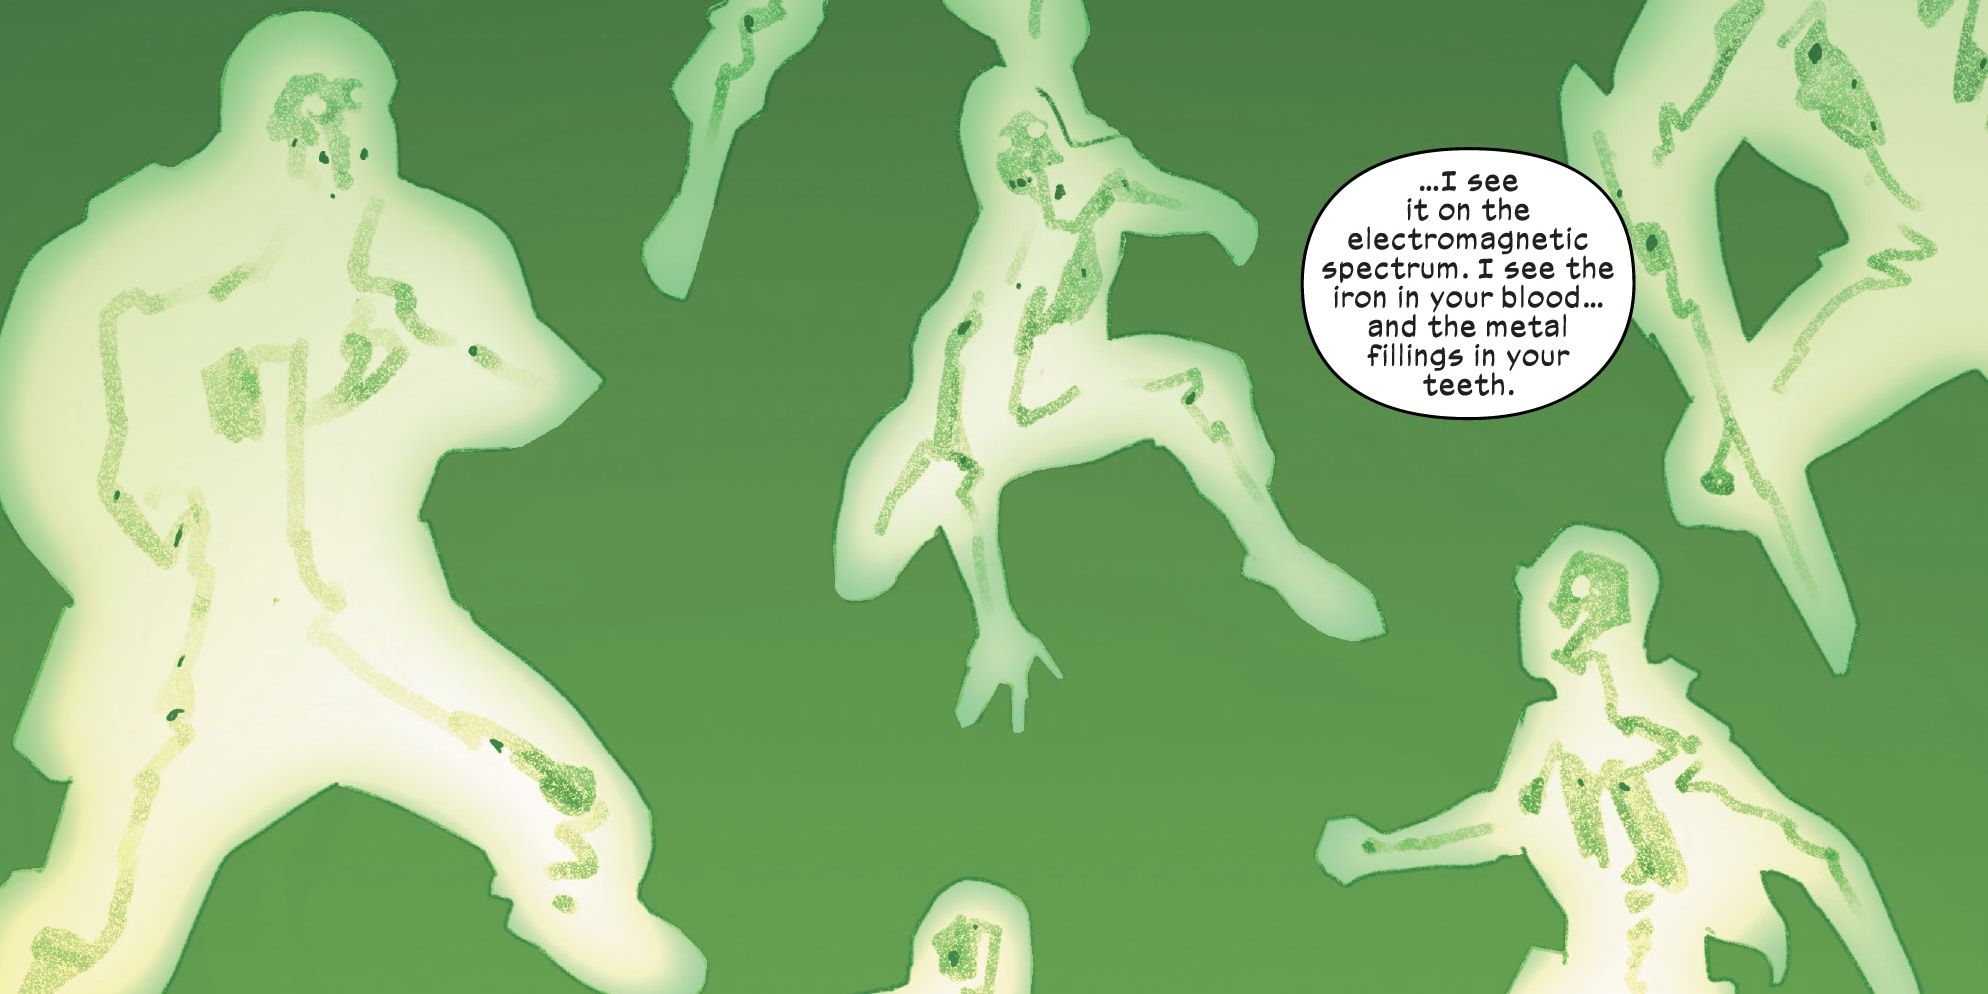 Polaris has electromagnetic vision in an x-men comic